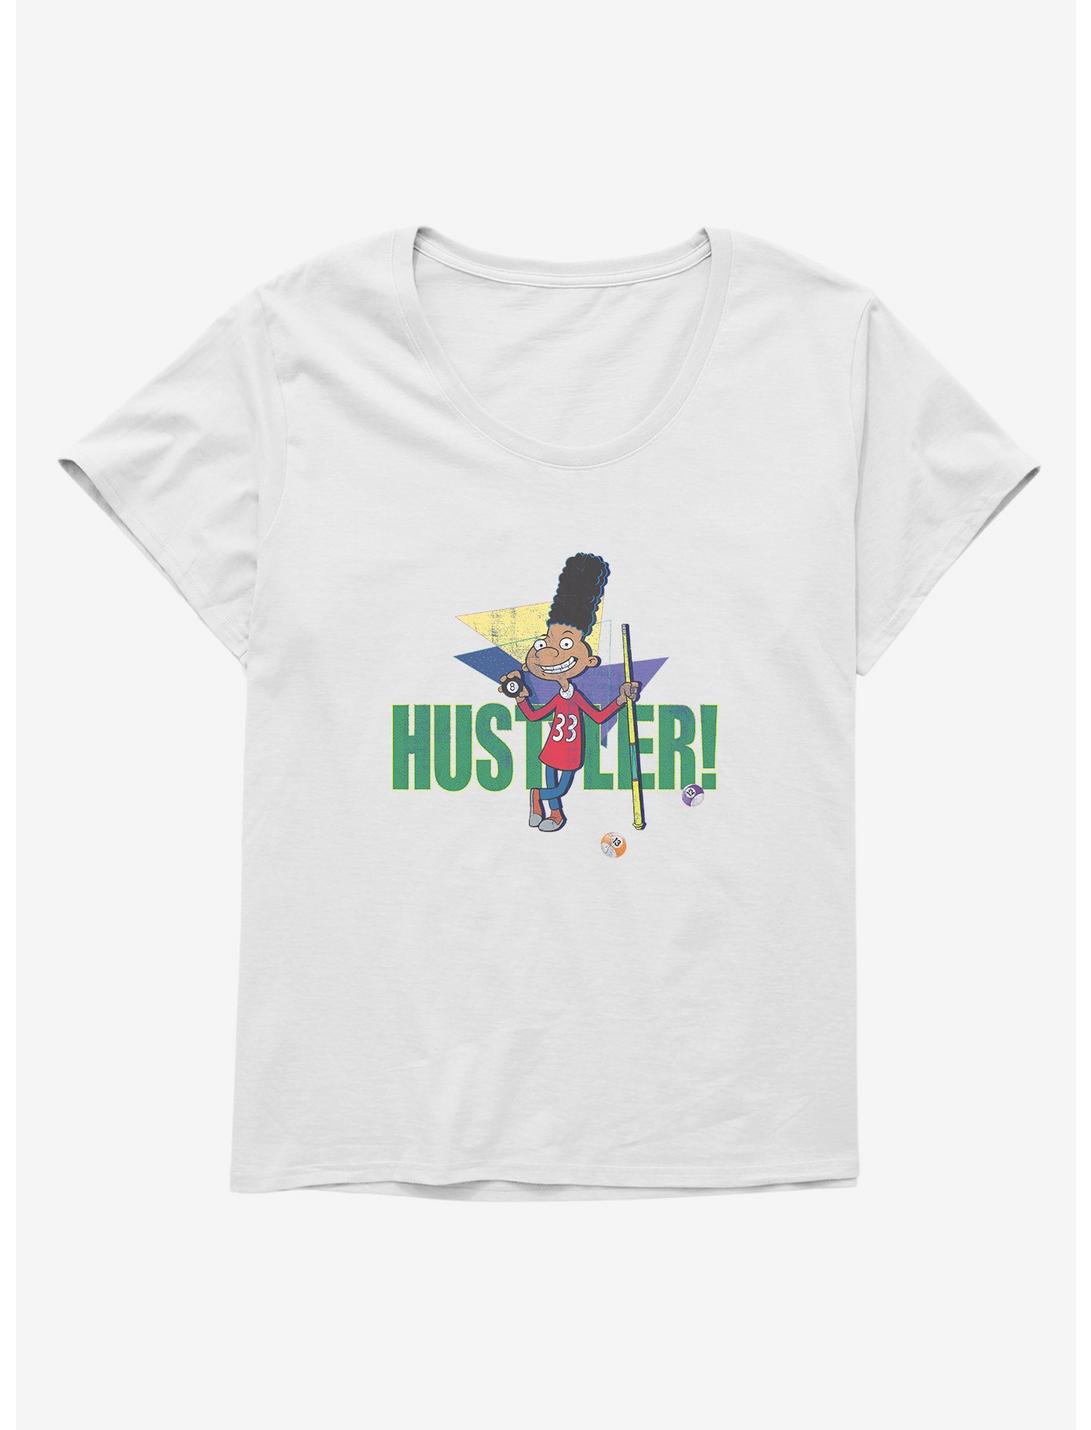 Hey Arnold! Hustler! Girls T-Shirt Plus Size, , hi-res